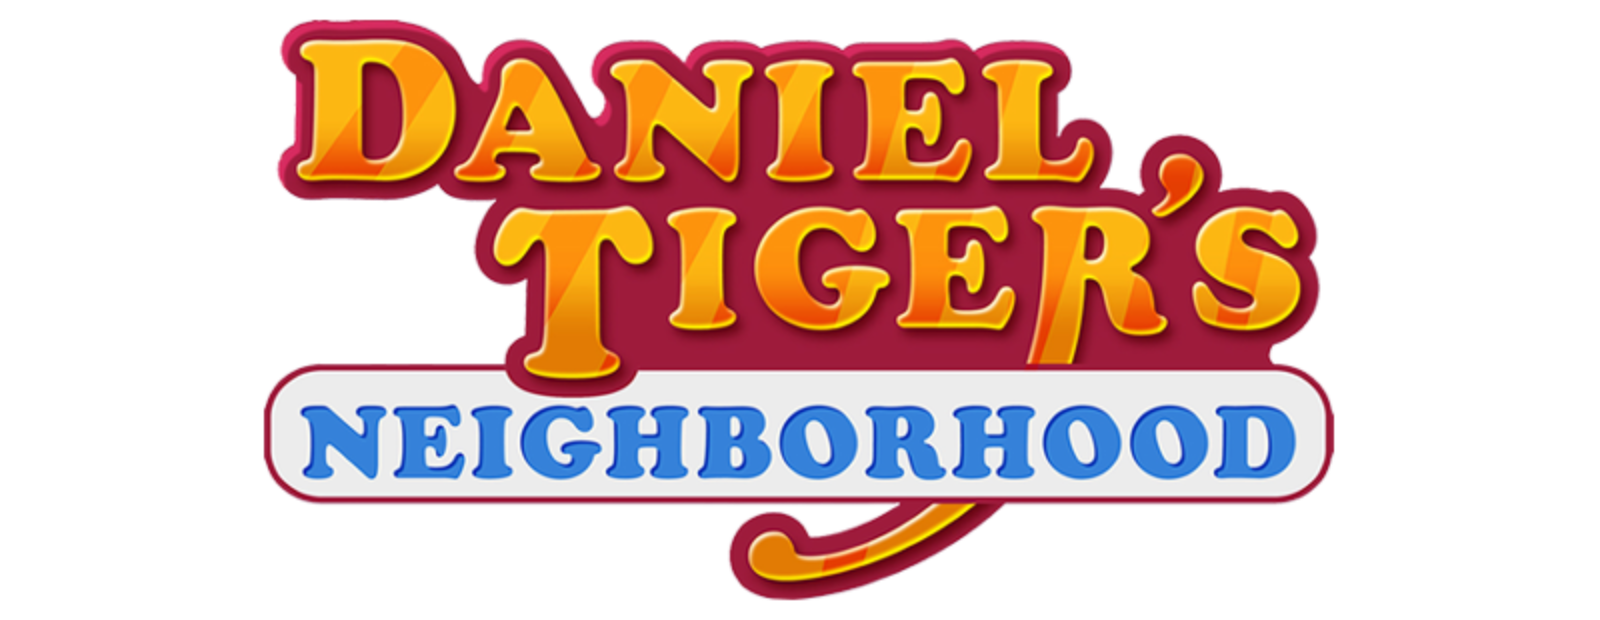 Daniel Tiger's Neighborhood (7 DVDs Box Set)